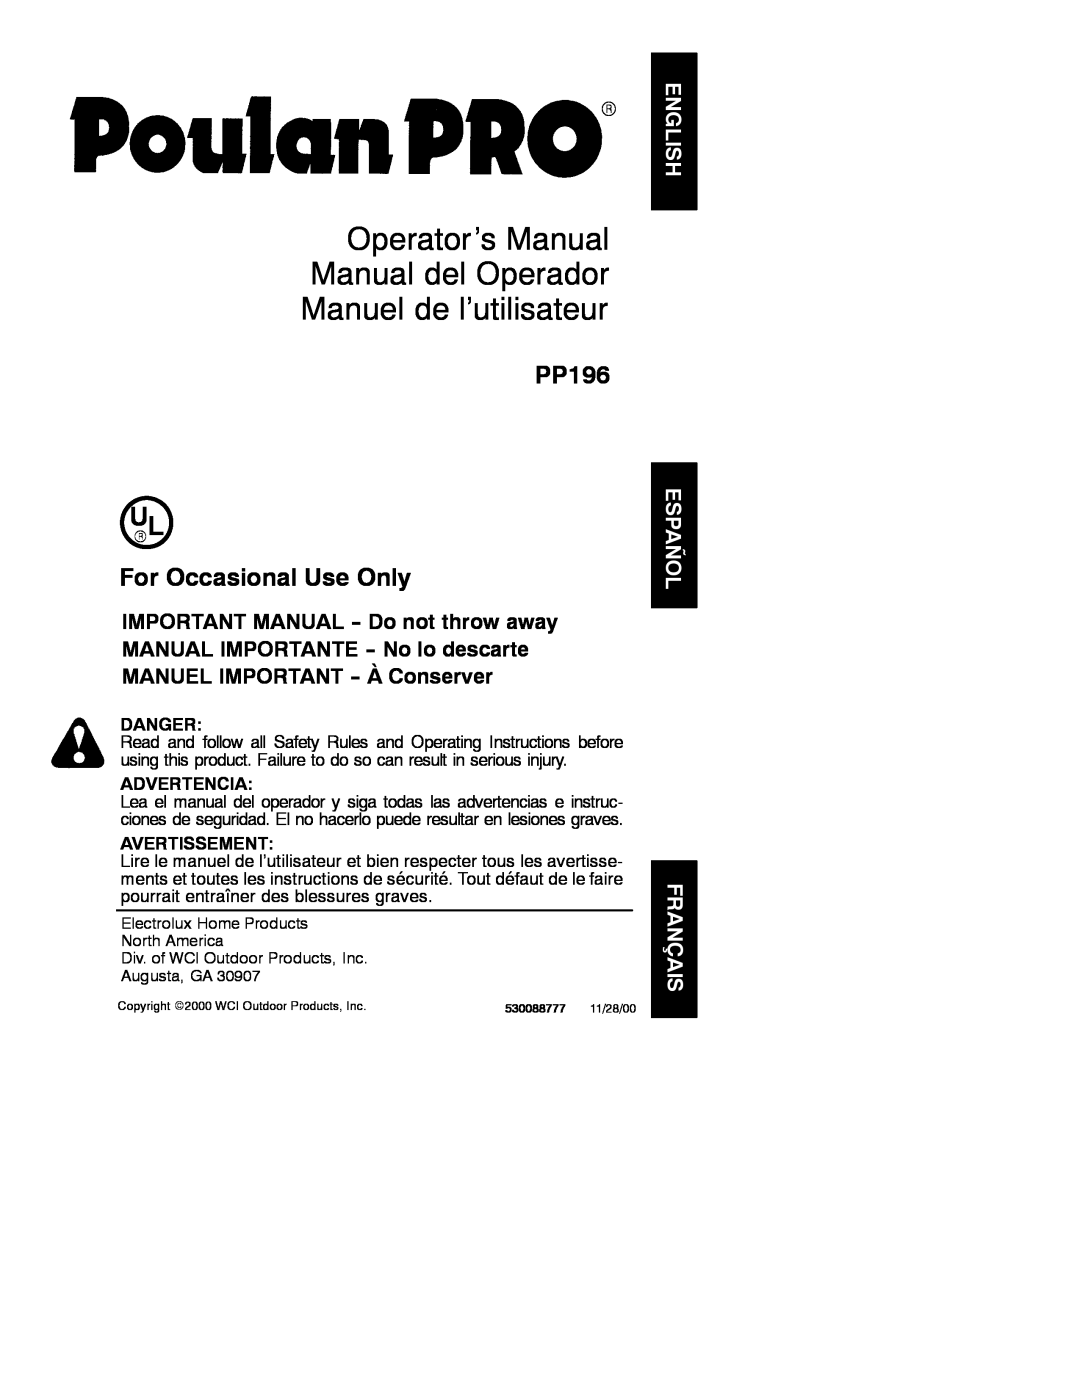 Poulan 530088777 manual Operator’s Manual Manual del Operador Manuel de l’utilisateur, PP196, For Occasional Use Only 